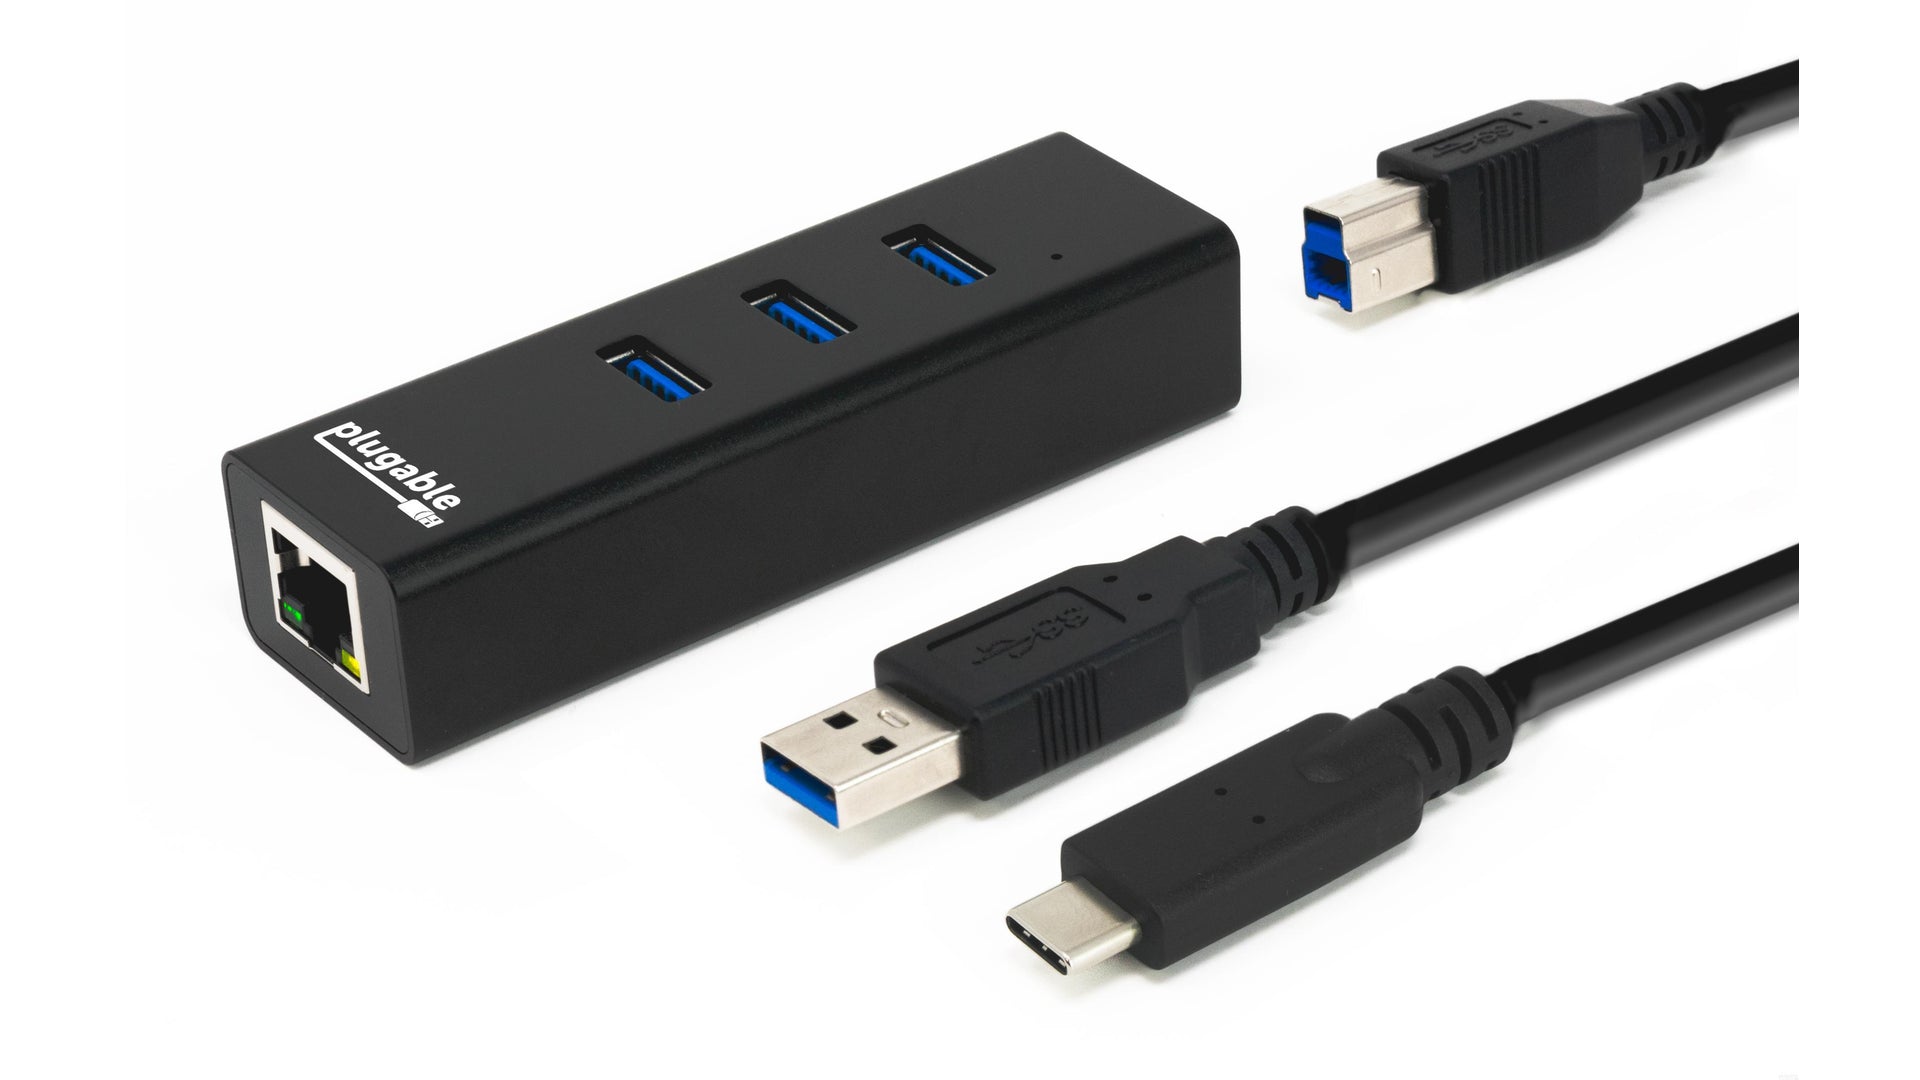 Plugable USB 3.0 3-Port Bus Powered Hub with Gigabit Ethernet